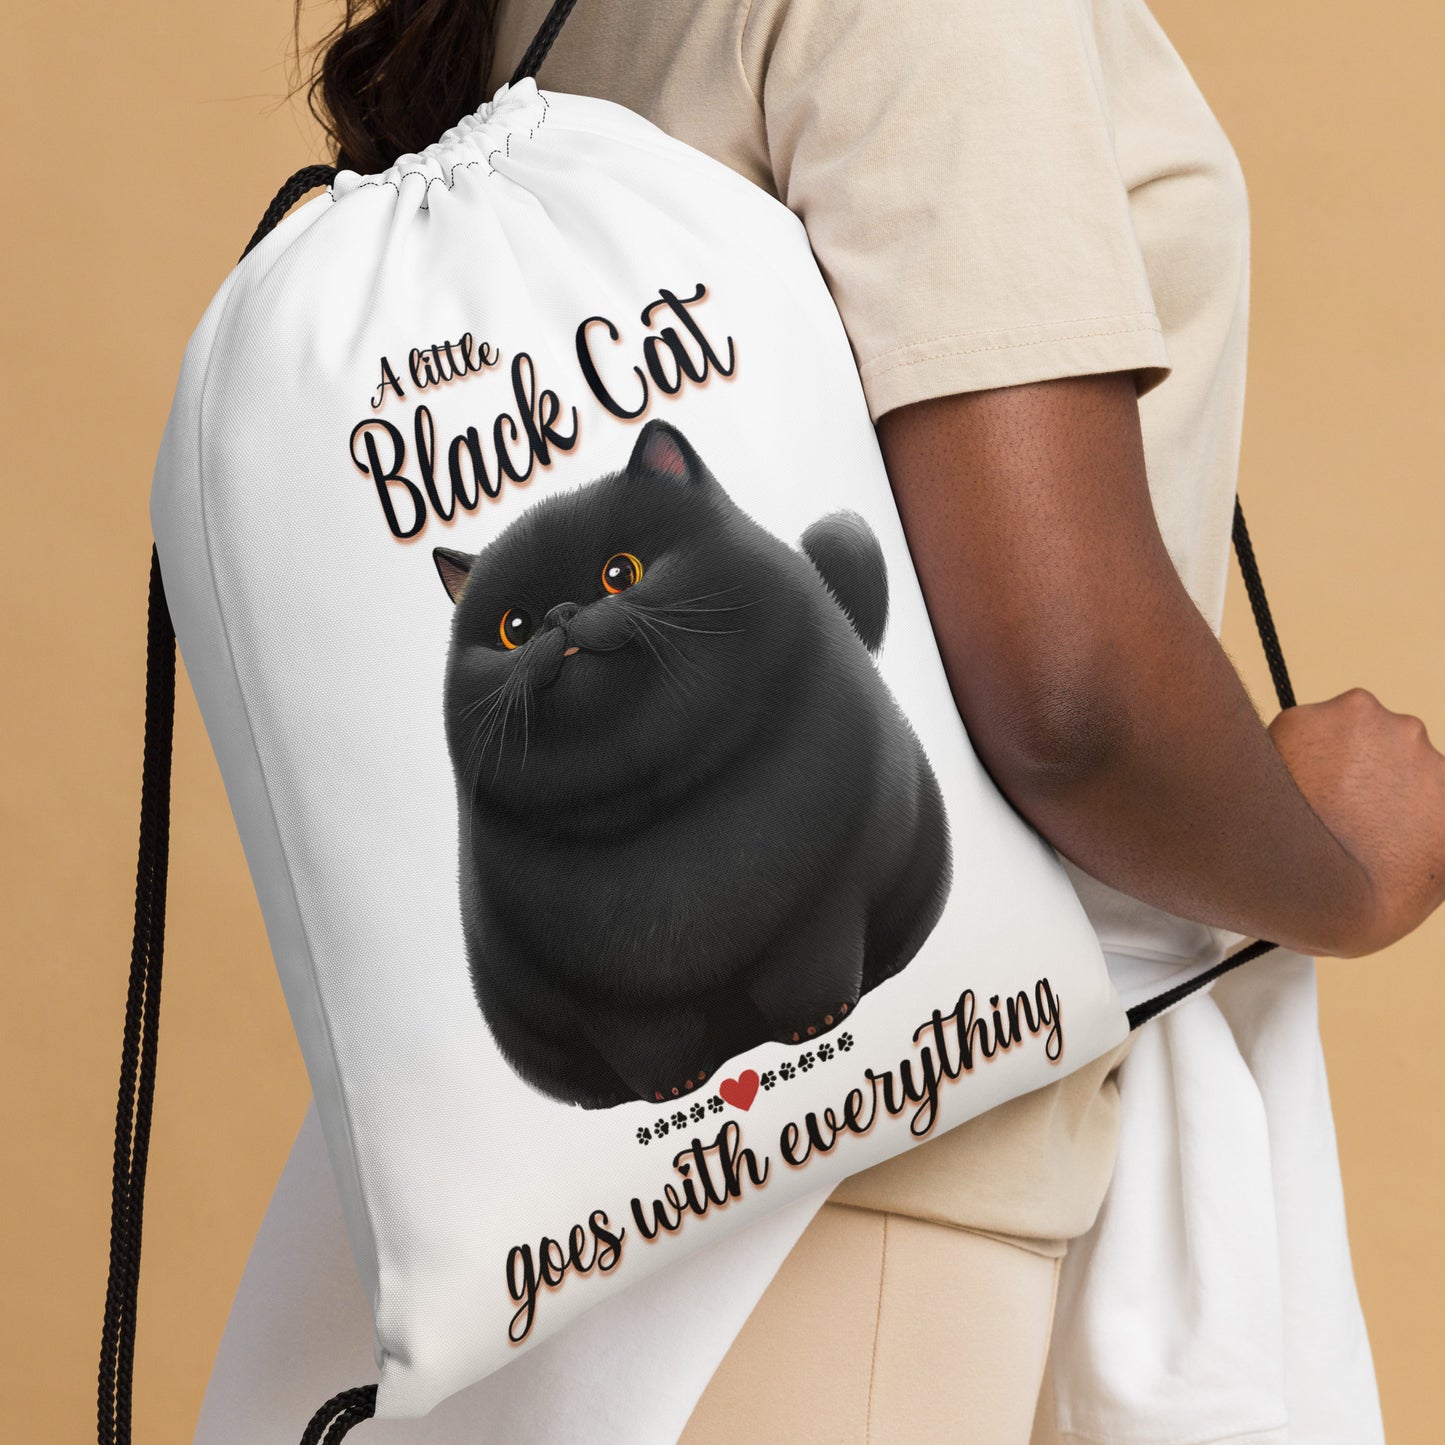 Black Cat Drawstring bag